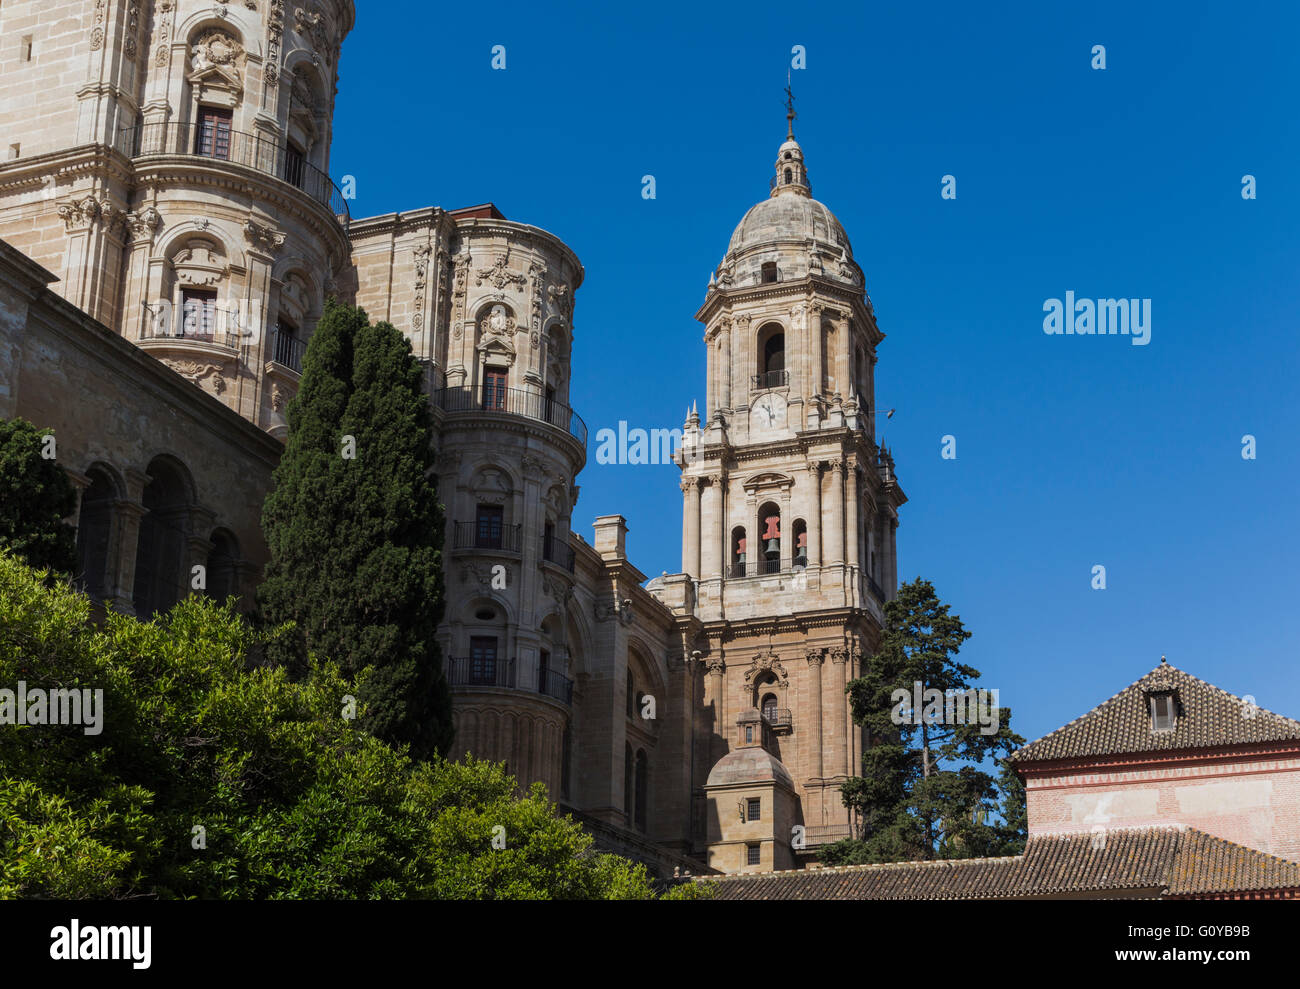 Malaga, Malaga Province, Costa del Sol, Andalusia, southern Spain. The Renaissance cathedral. Stock Photo